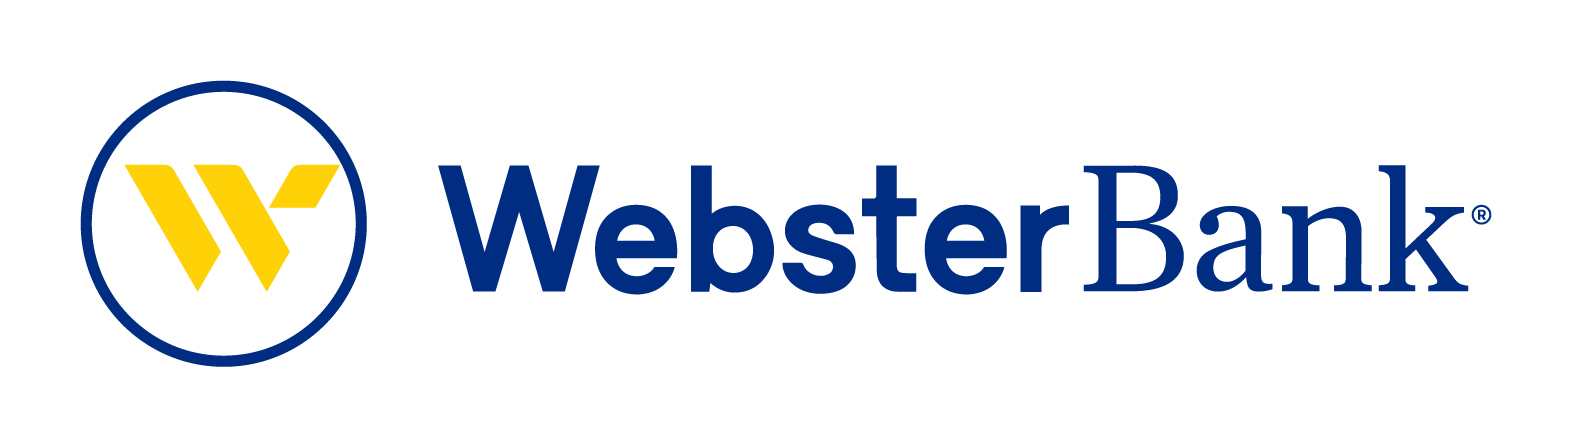 20Webster-Websterbank-lockup-rbg (1)